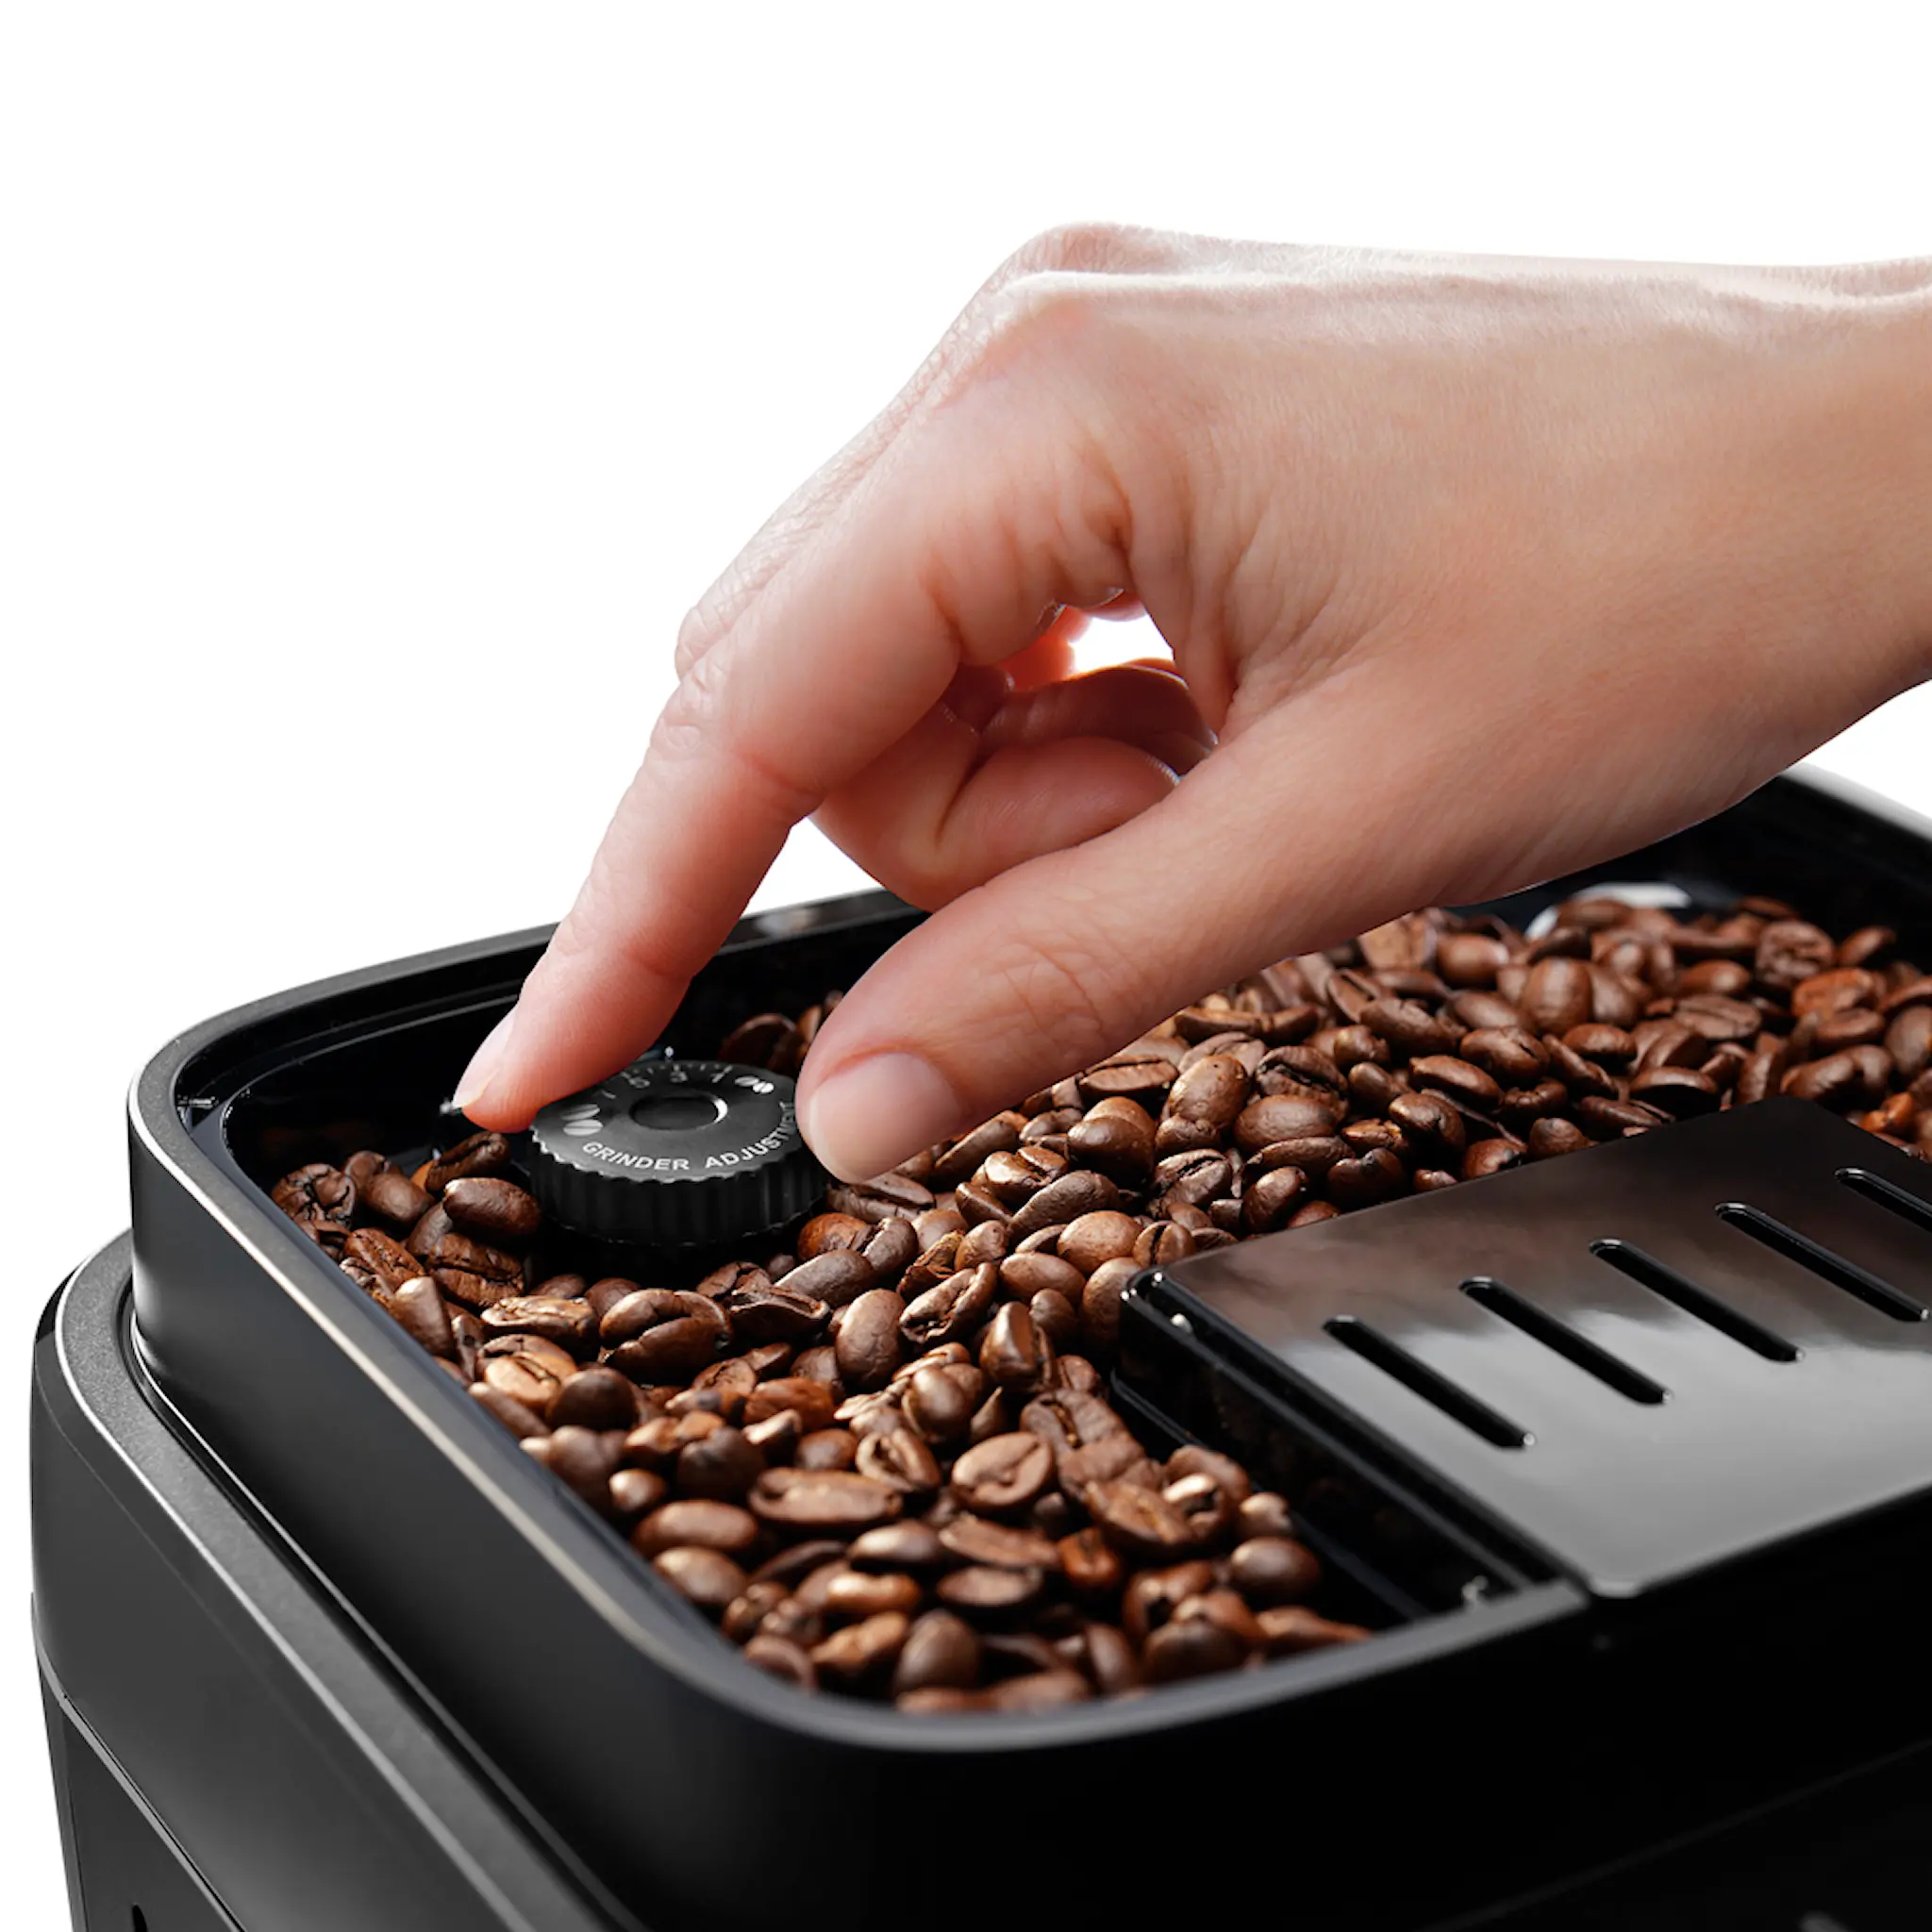 De'Longhi Magnifica Evo kaffemaskin ECAM290.42TB automatisk